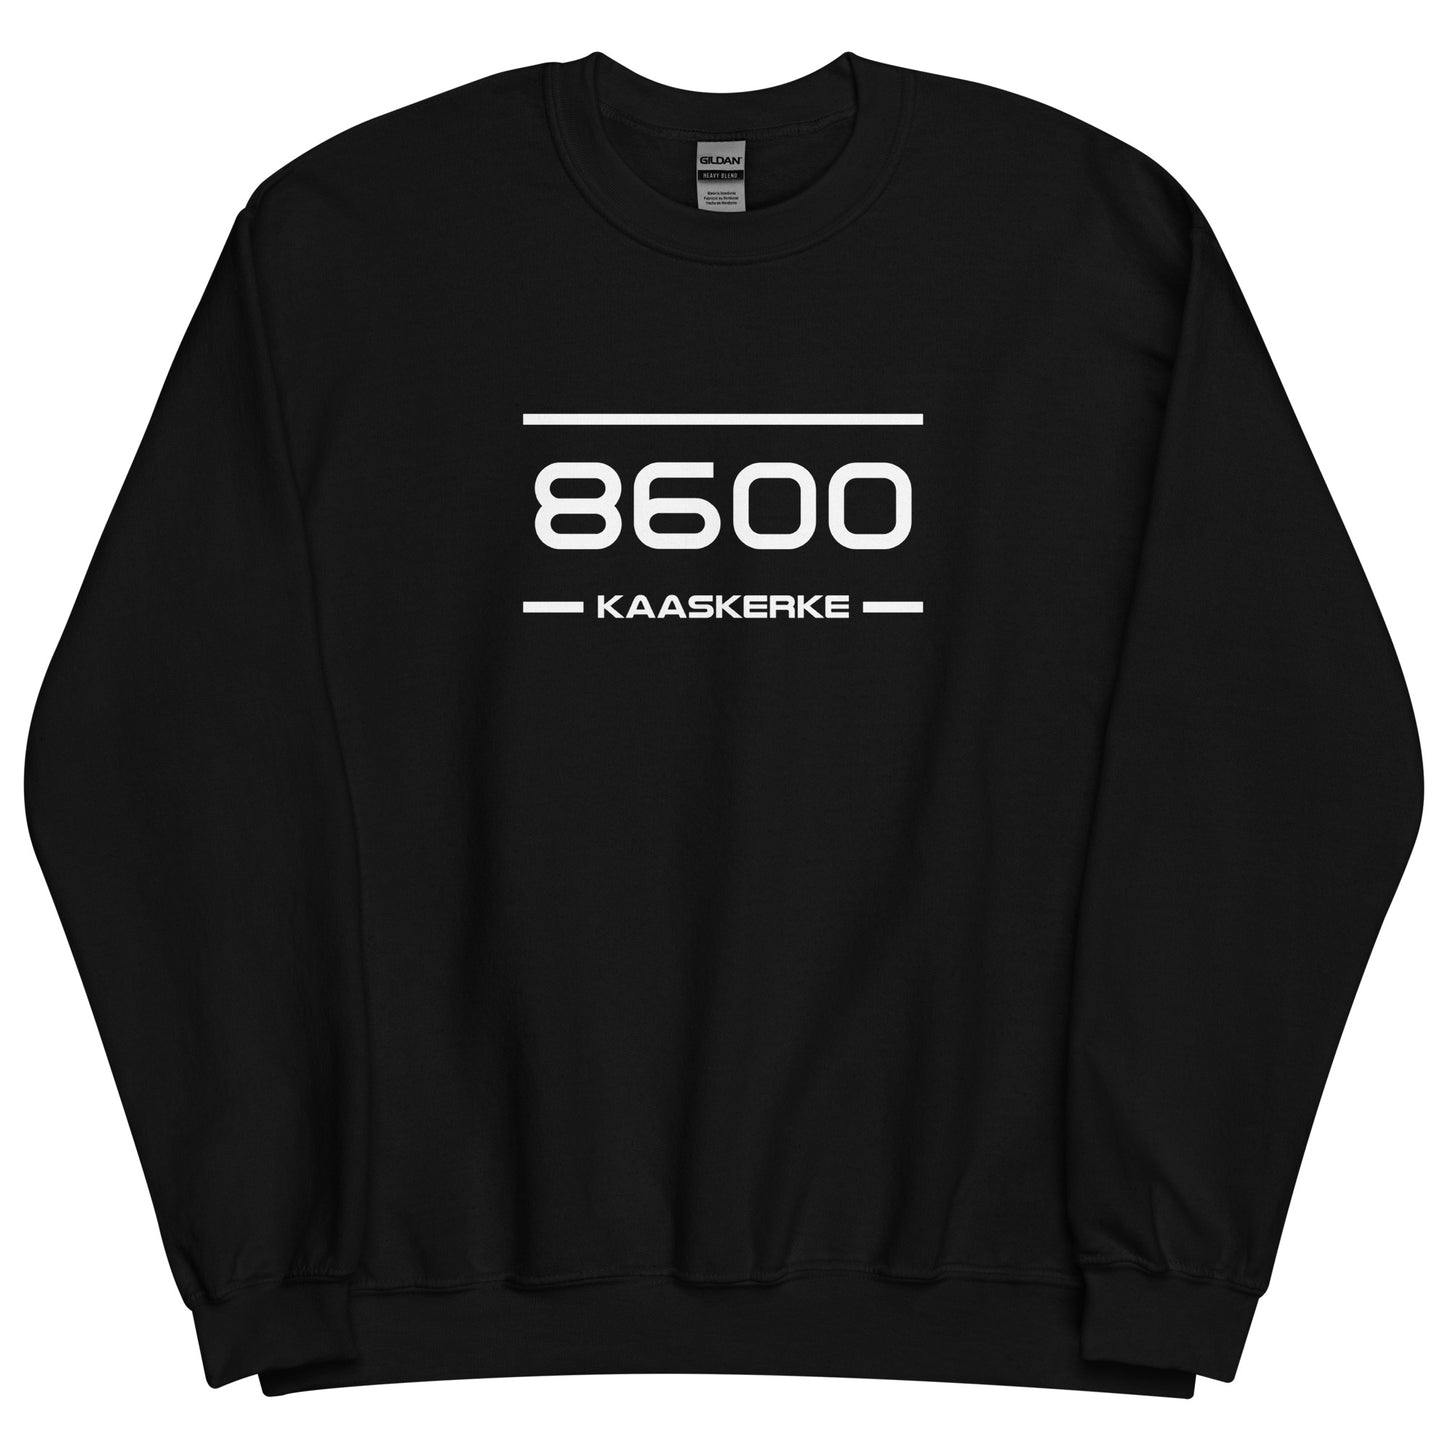 Sweater - 8600 - Kaaskerke (M/V)